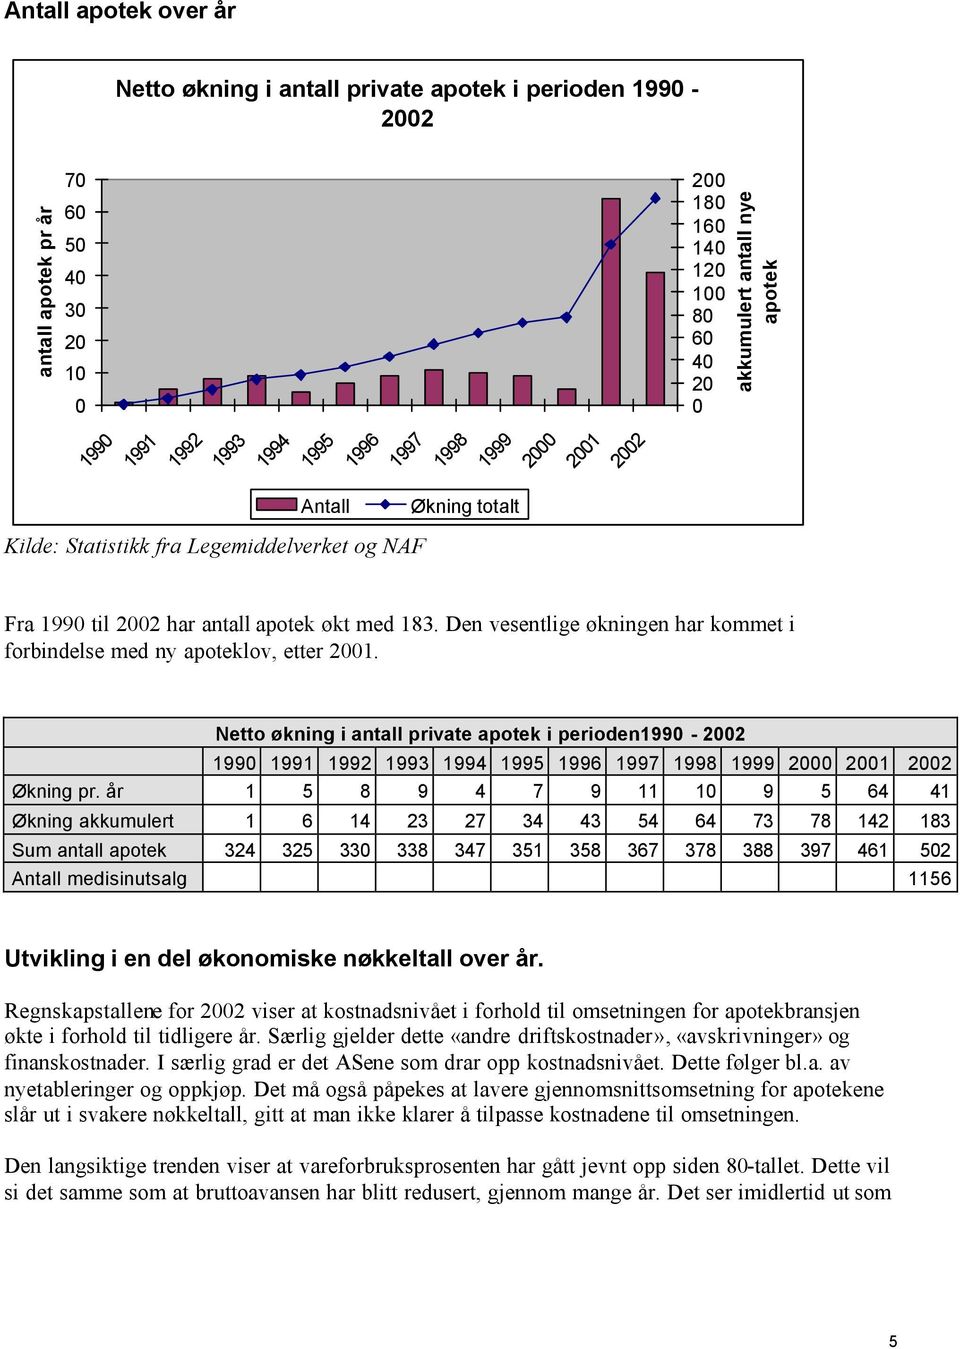 Den vesentlige økningen har kommet i forbindelse med ny apoteklov, etter 2001.